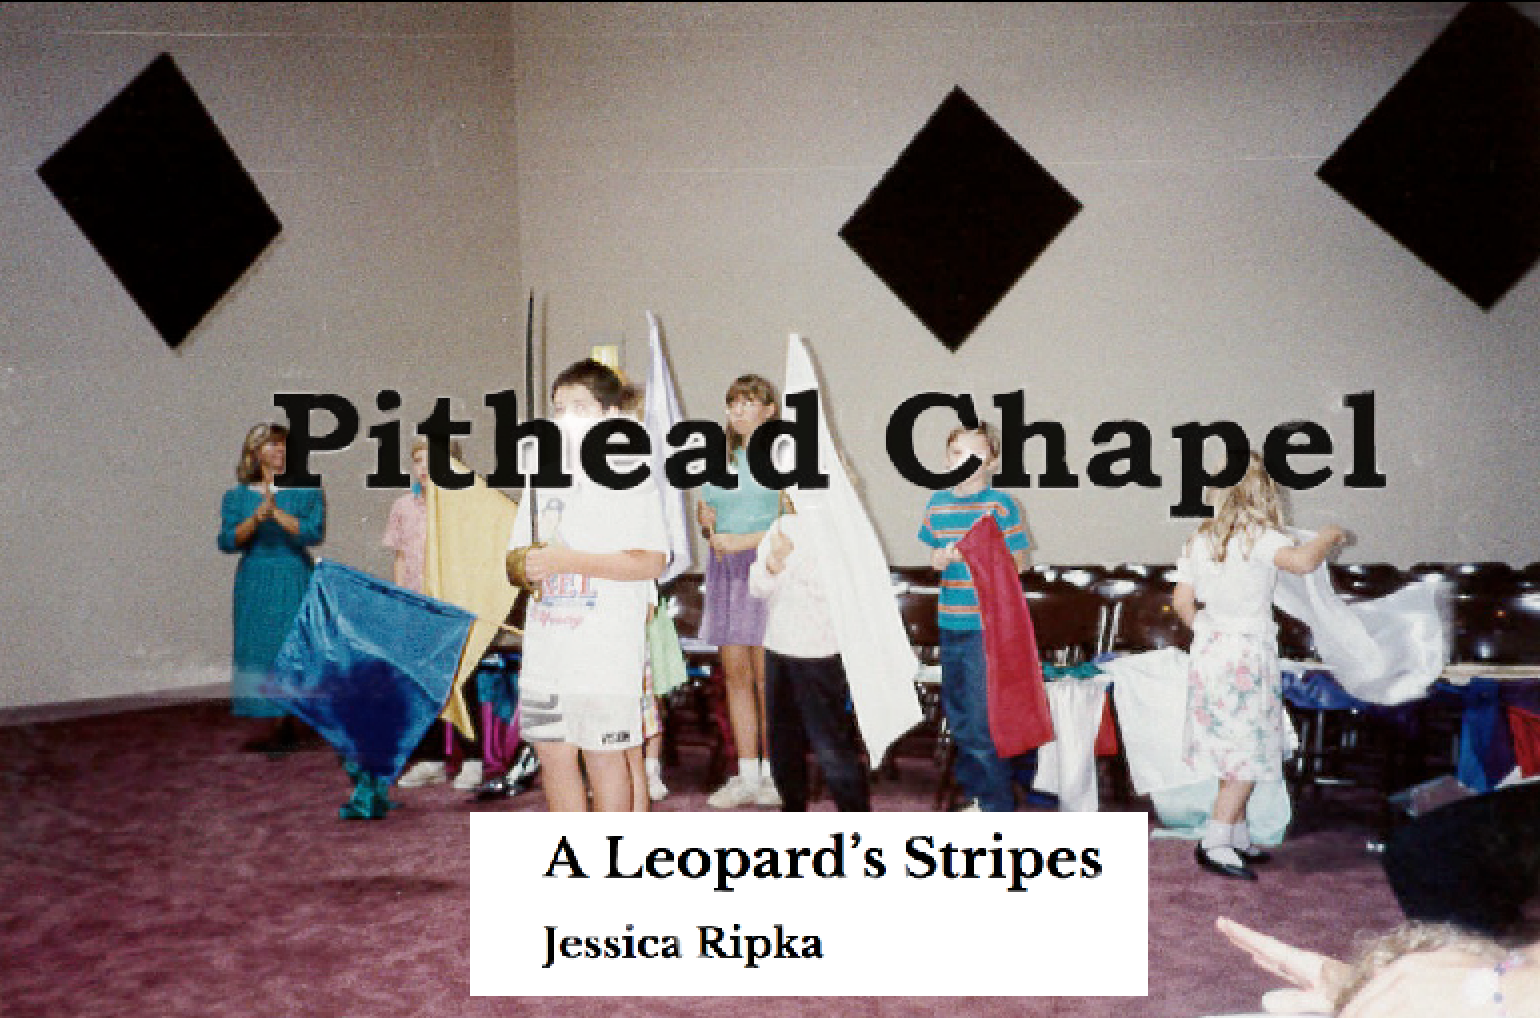 210201_20201108_A Leopard’s Stripes | Pithead Chapel.png